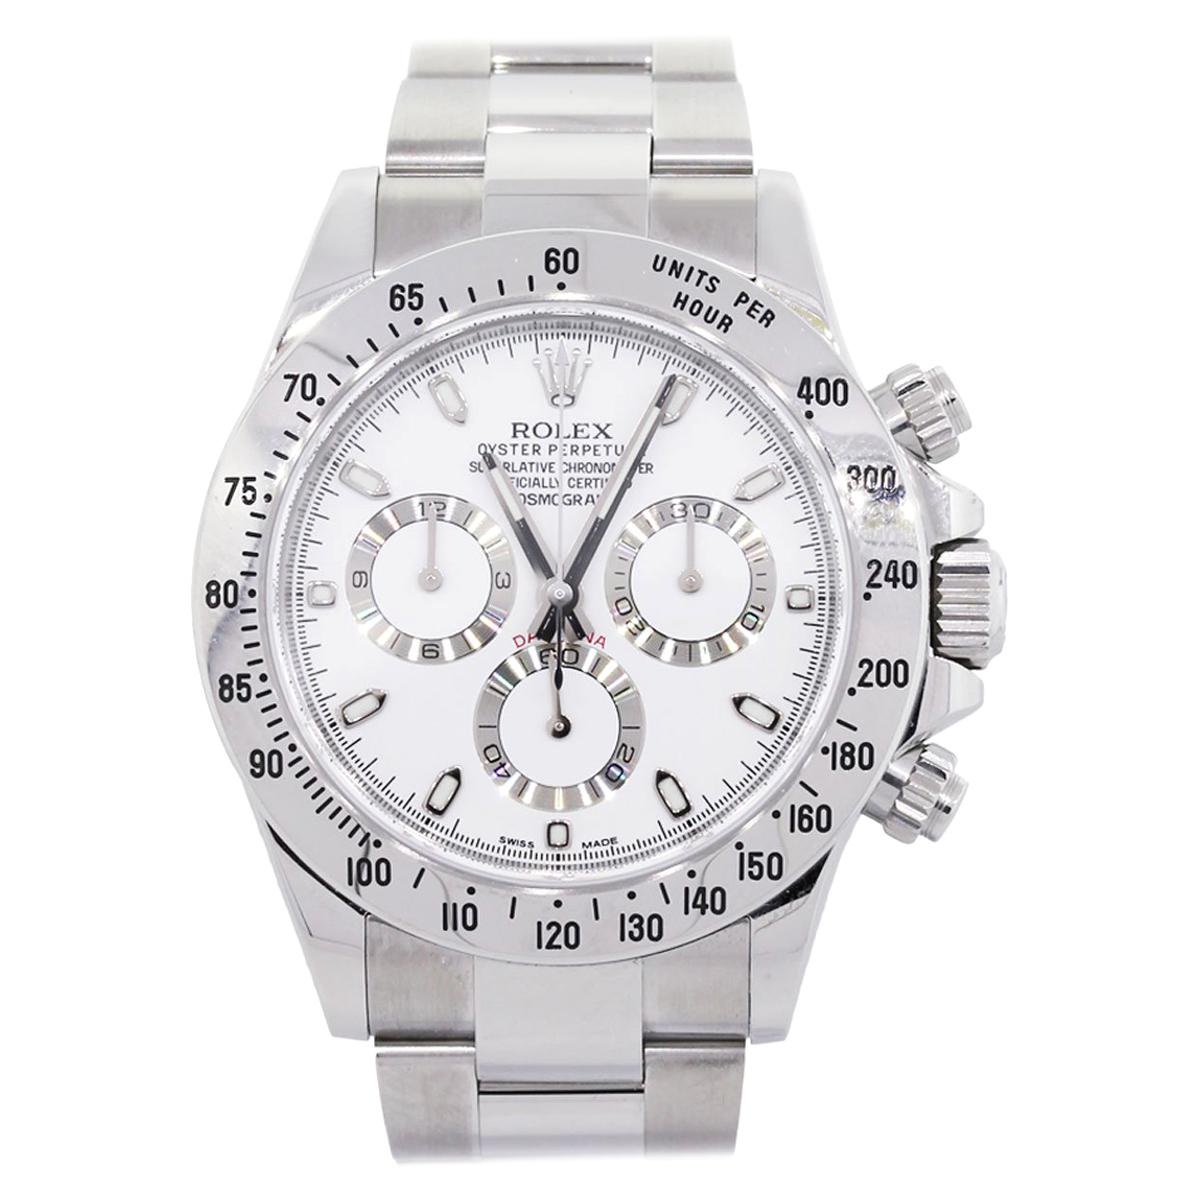 Rolex 116520 Daytona White Chronograph Dial Wrist Watch